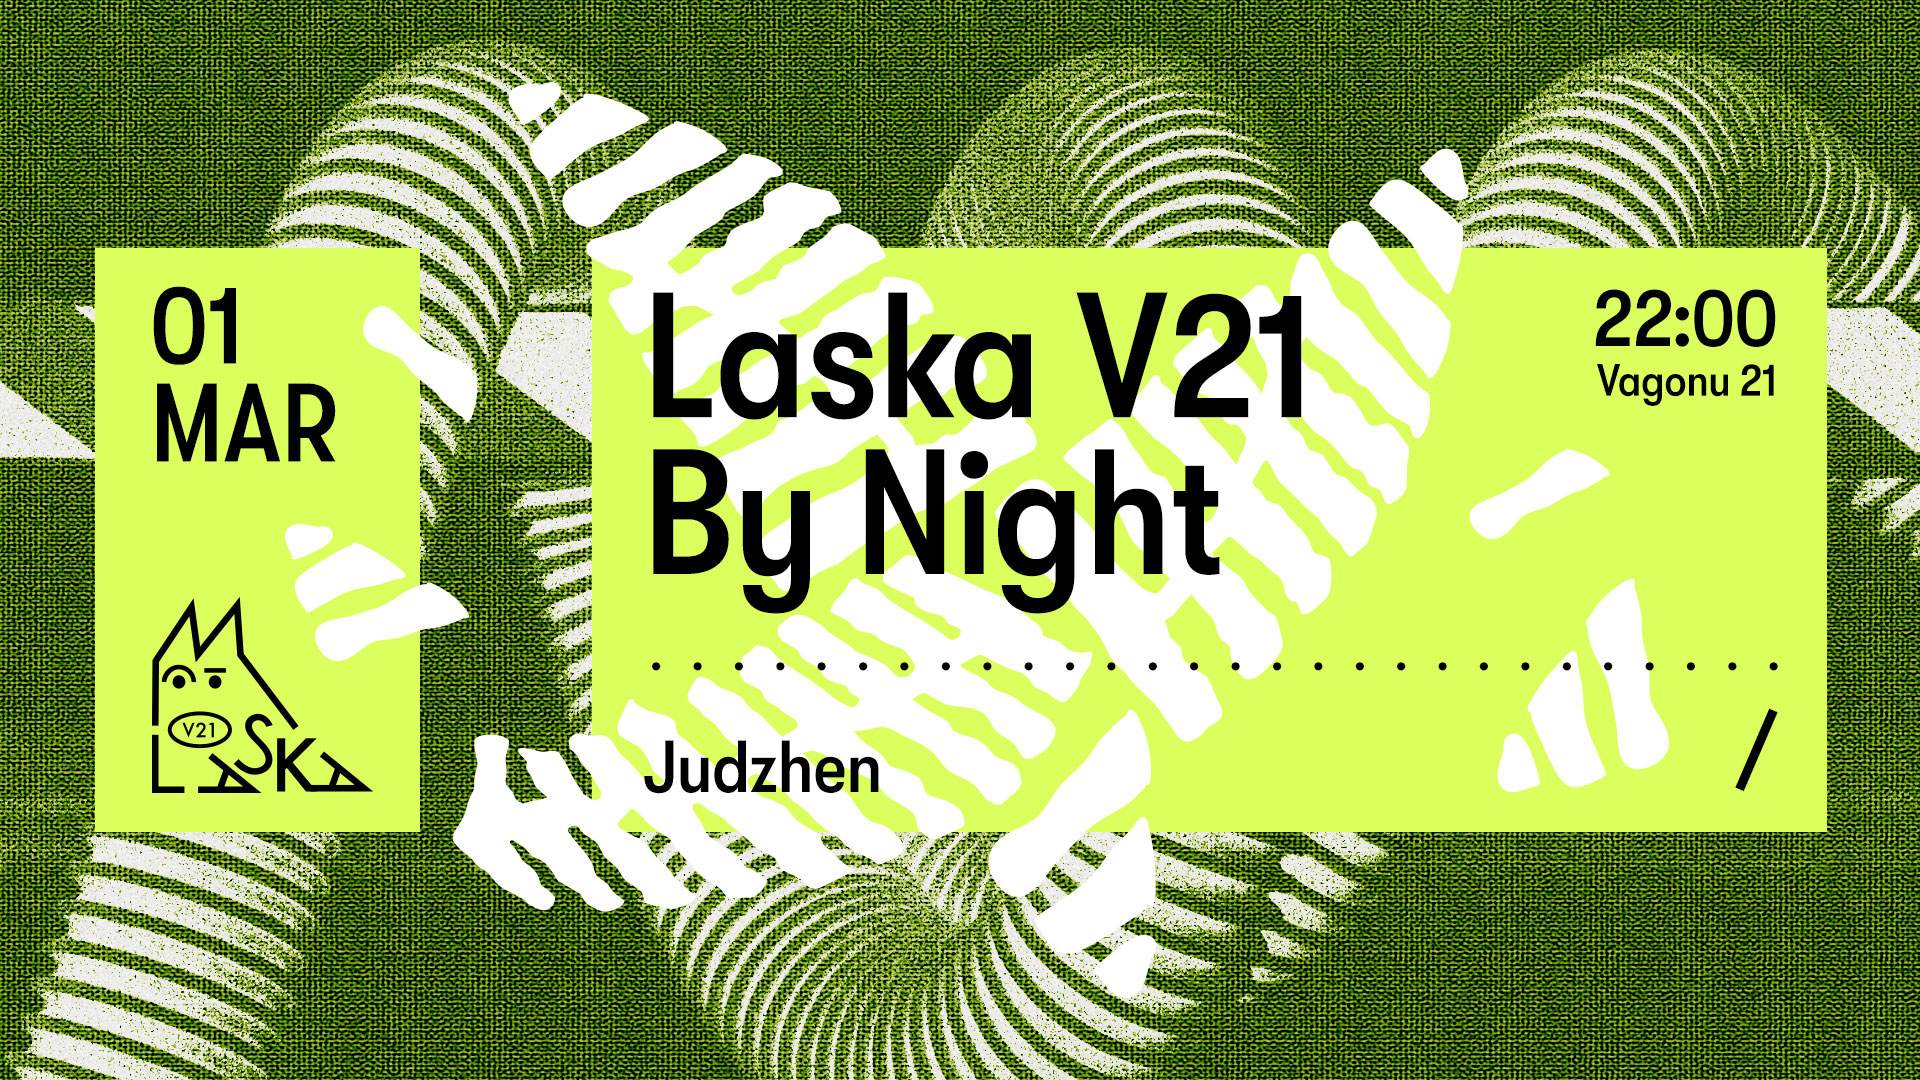 Laska V21 by Night - Judzhen - フライヤー表